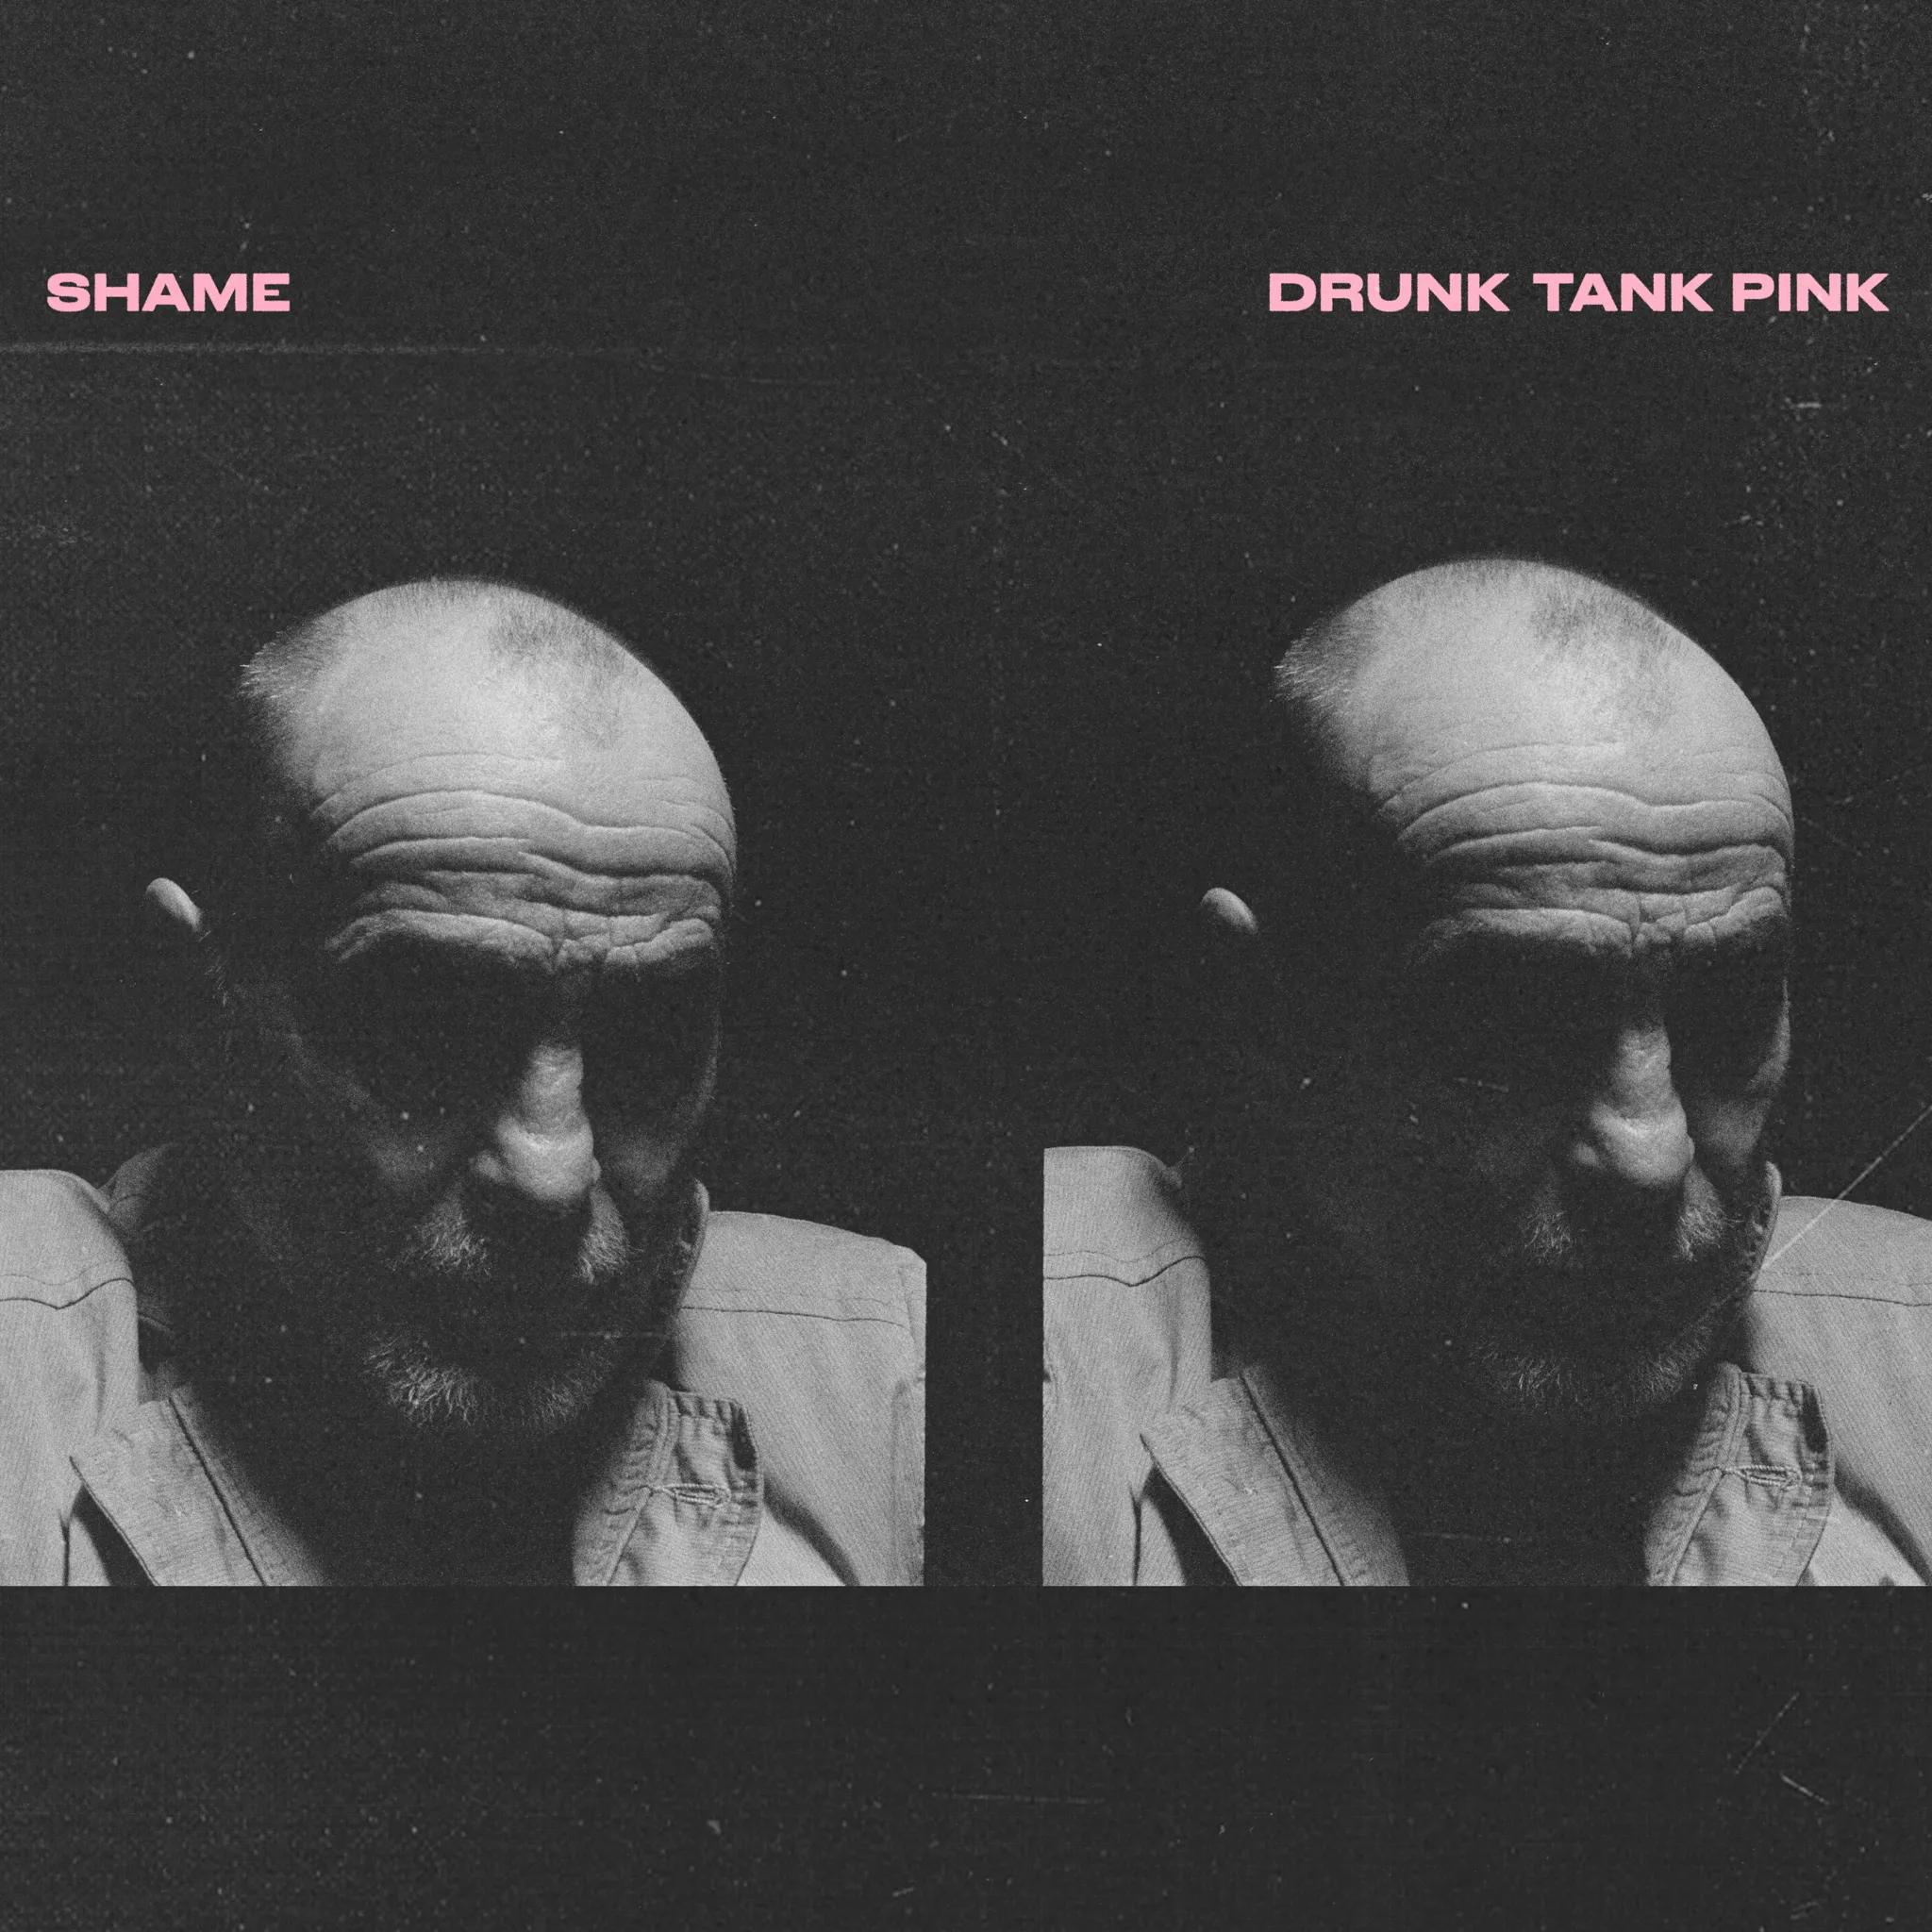 Buy Drunk Tank Pink via Rough Trade